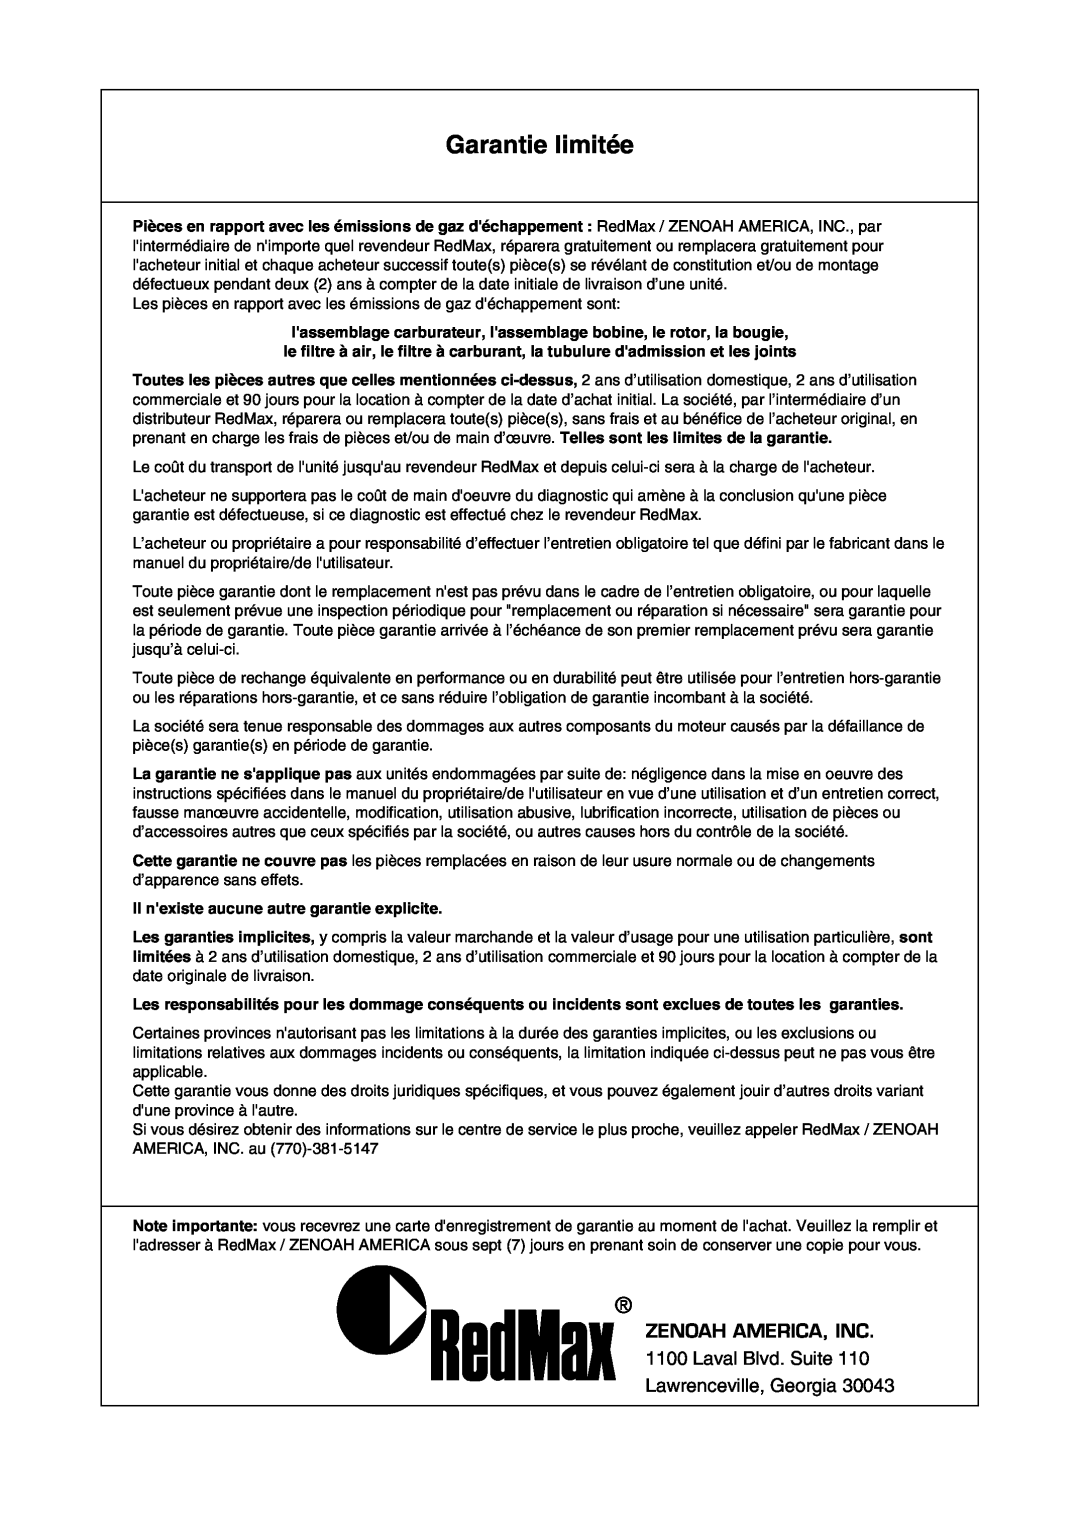 Zenoah HBZ2601-CA manual Garantie limitée, Zenoah America, Inc, Il nexiste aucune autre garantie explicite 